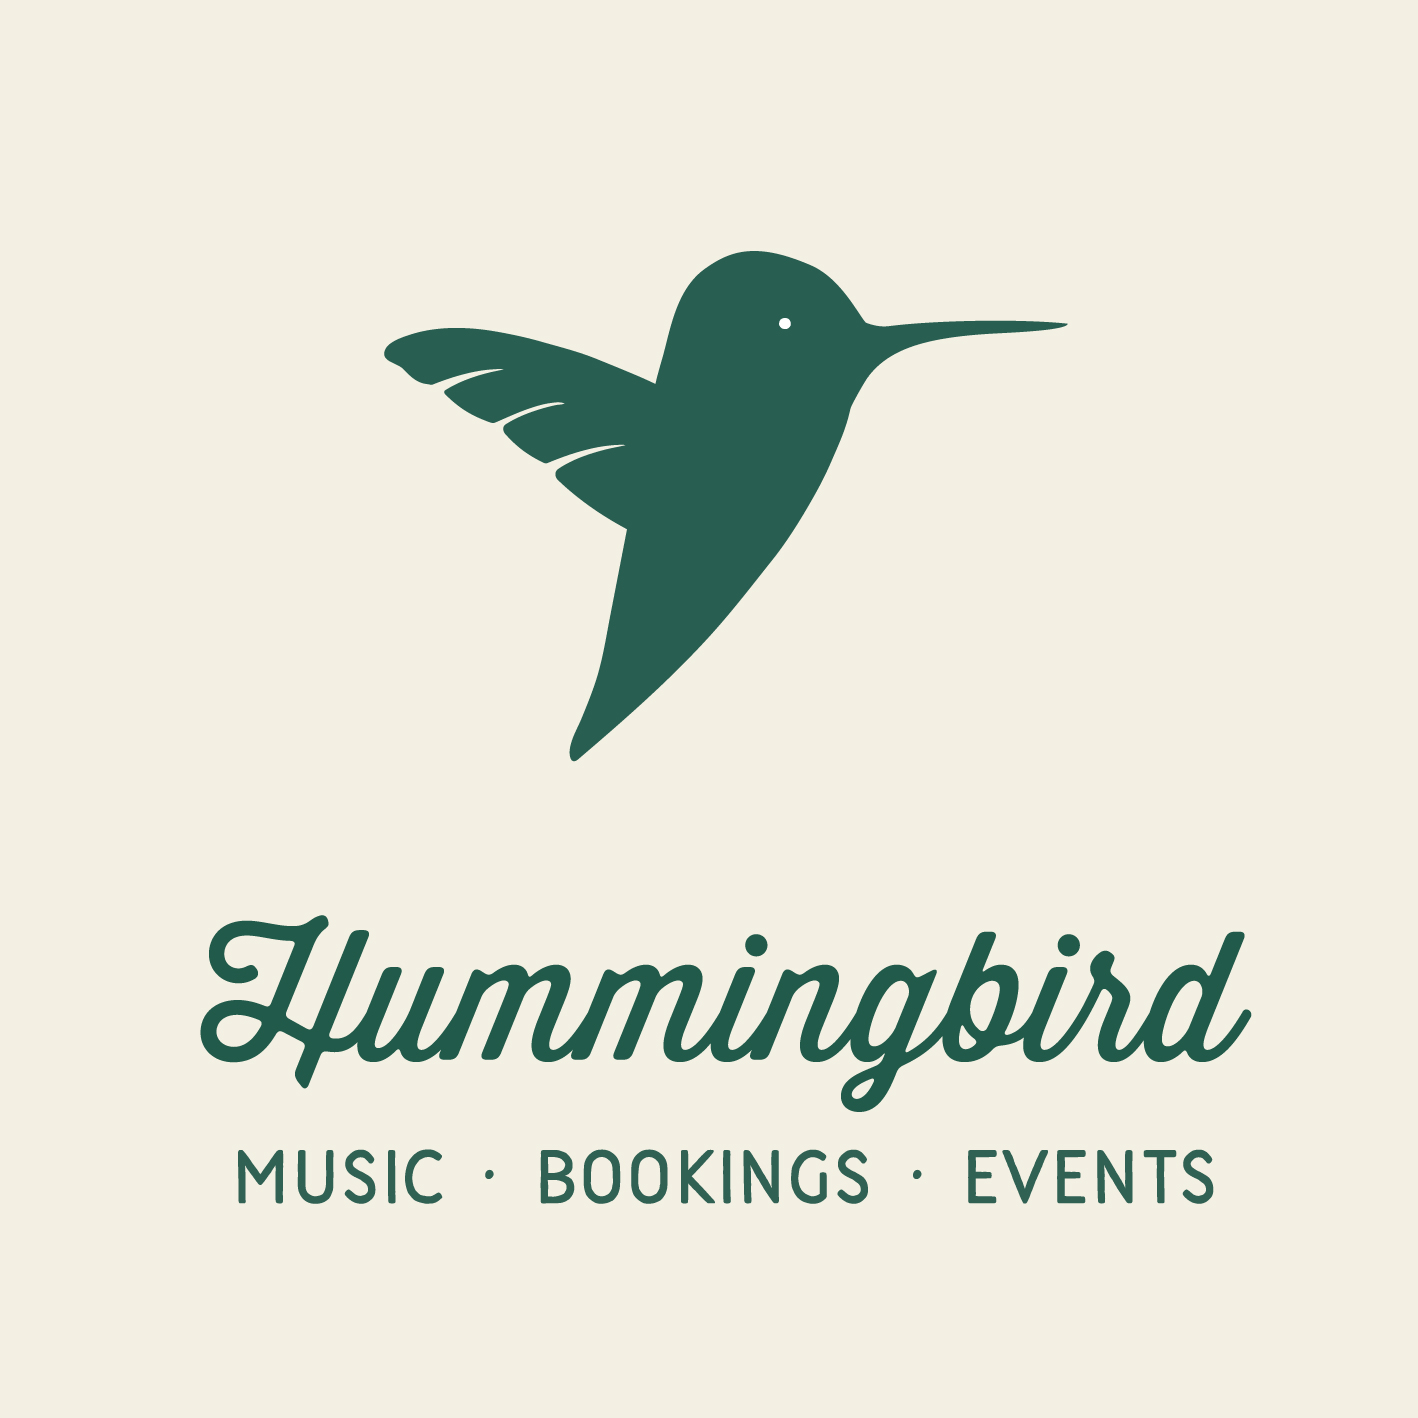 Hummingbird Music Bookings & Events